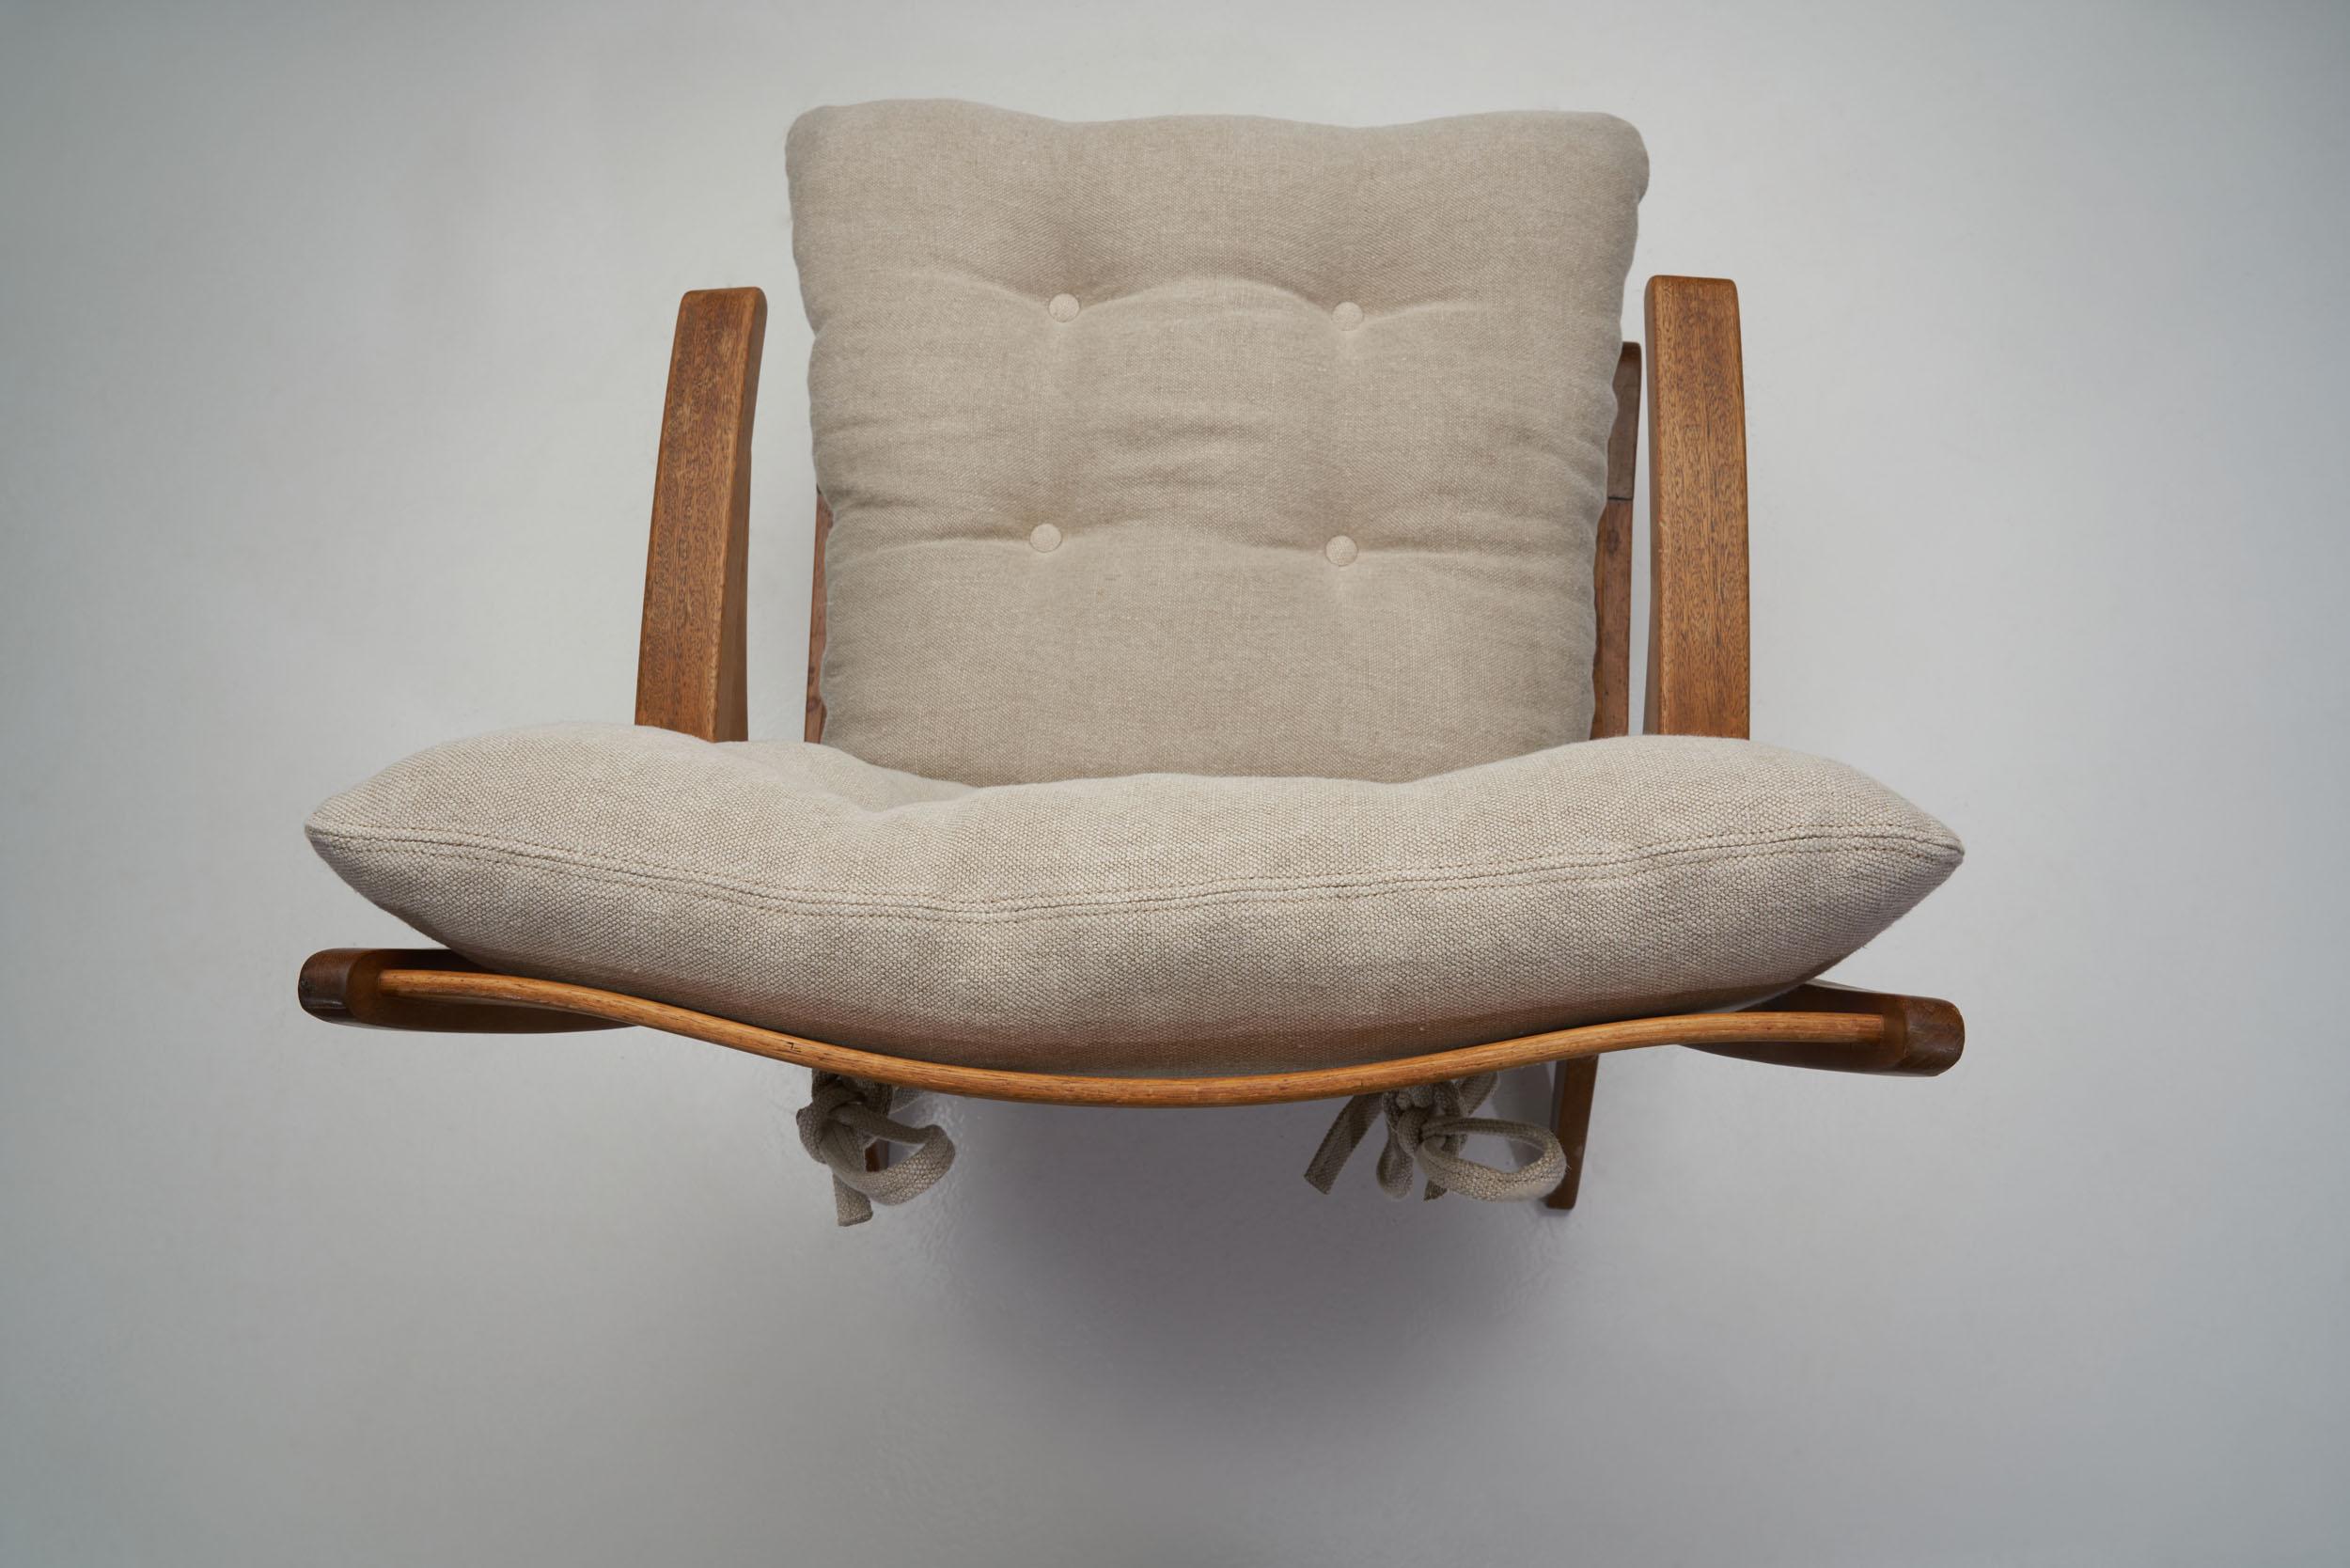 Dutch Modern High Back Chair by Jan den Drijver for De Stijl, The Hague 1950s For Sale 1